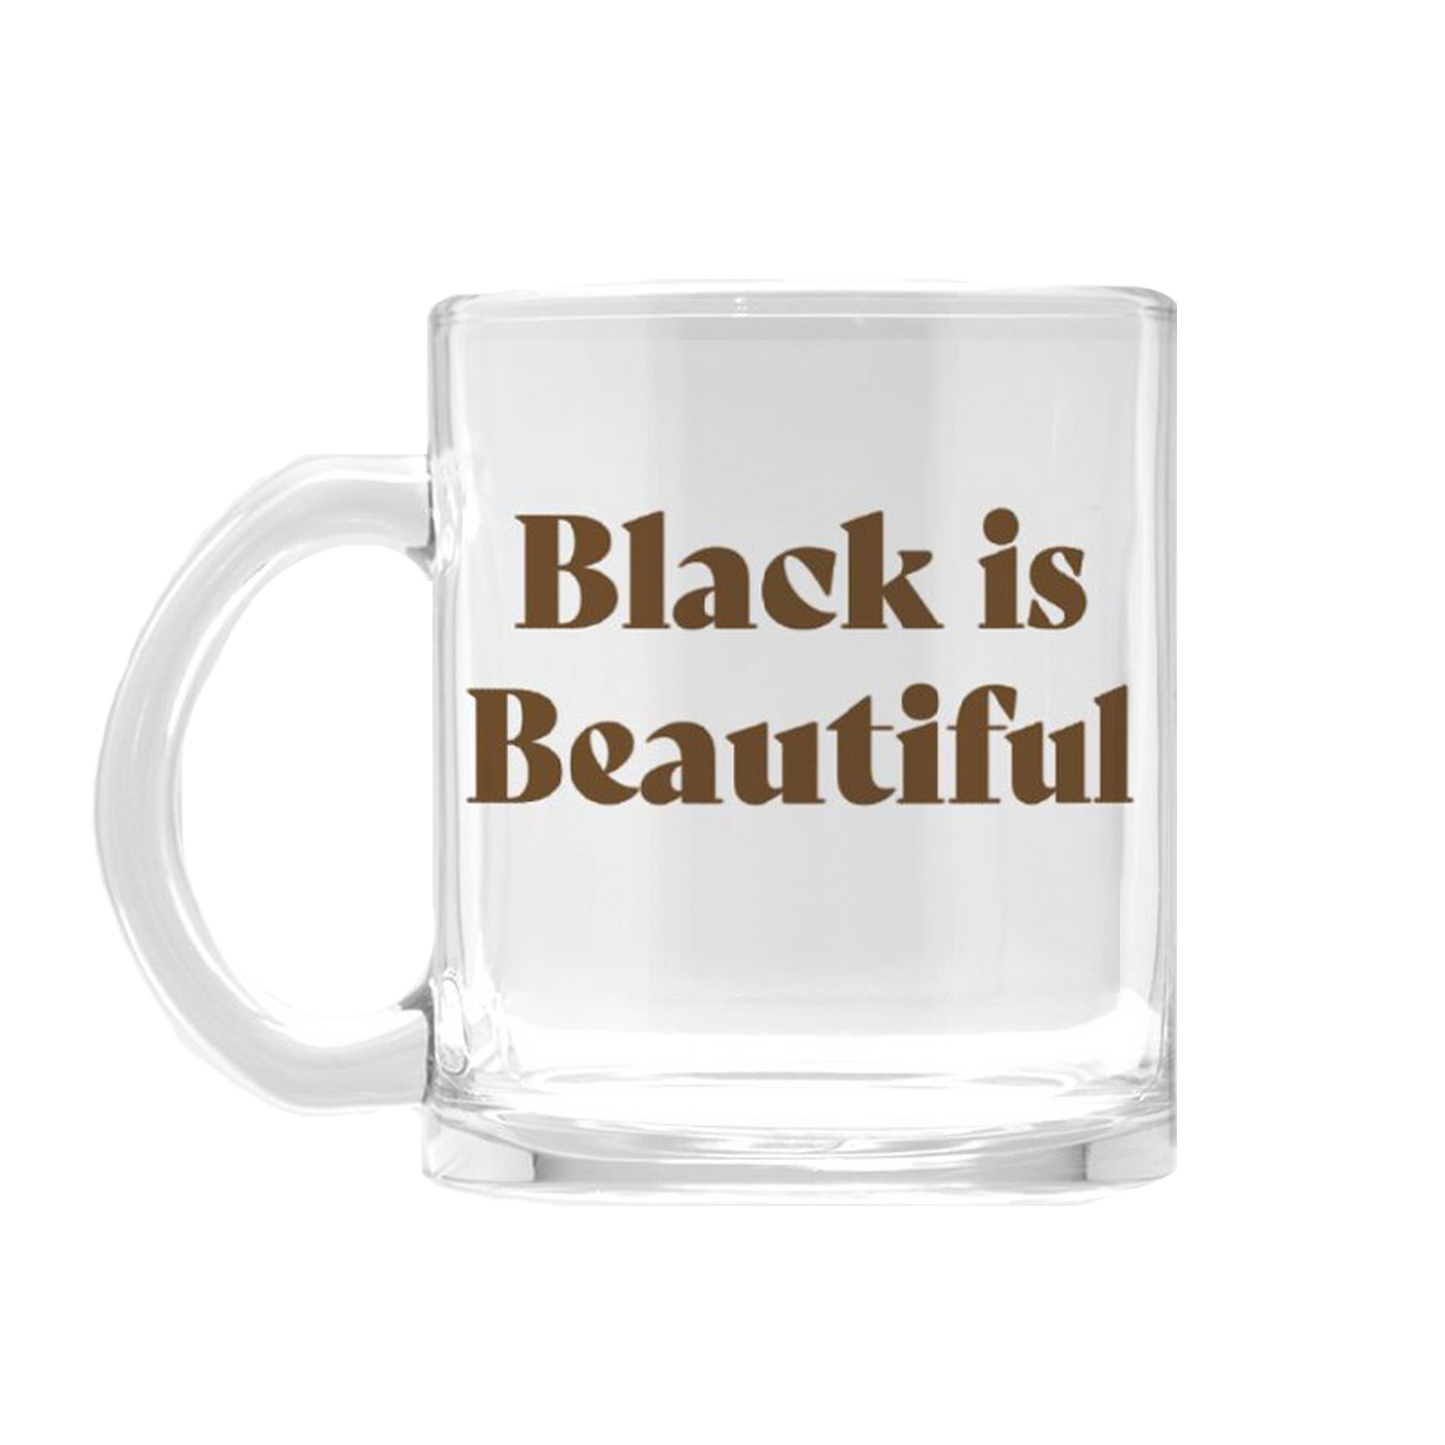 Black is Beautiful Clear Glass Mug